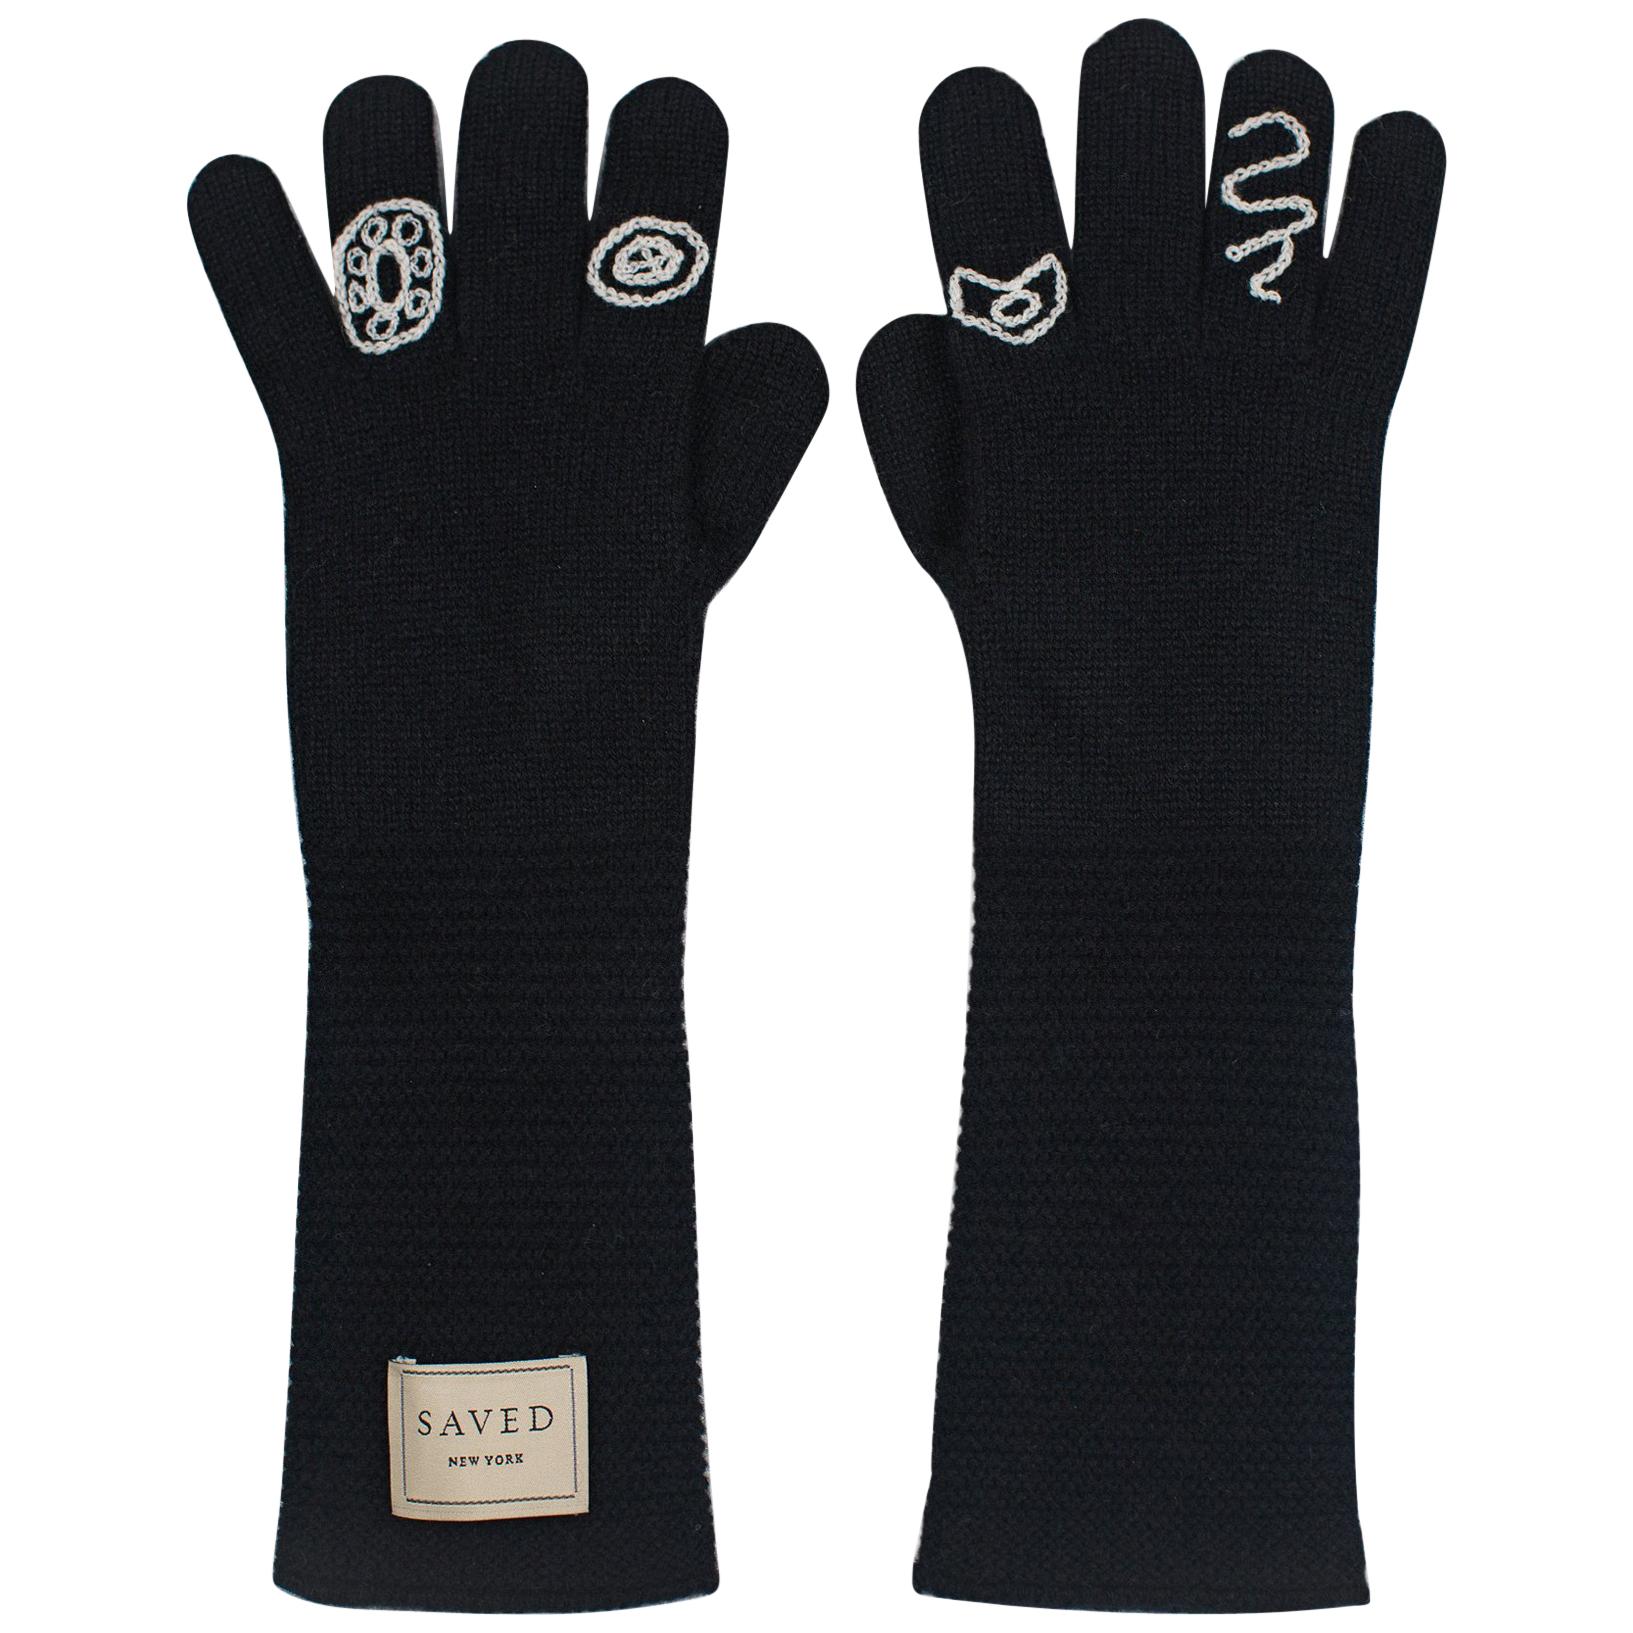 Black Opera Gloves by Saved, New York